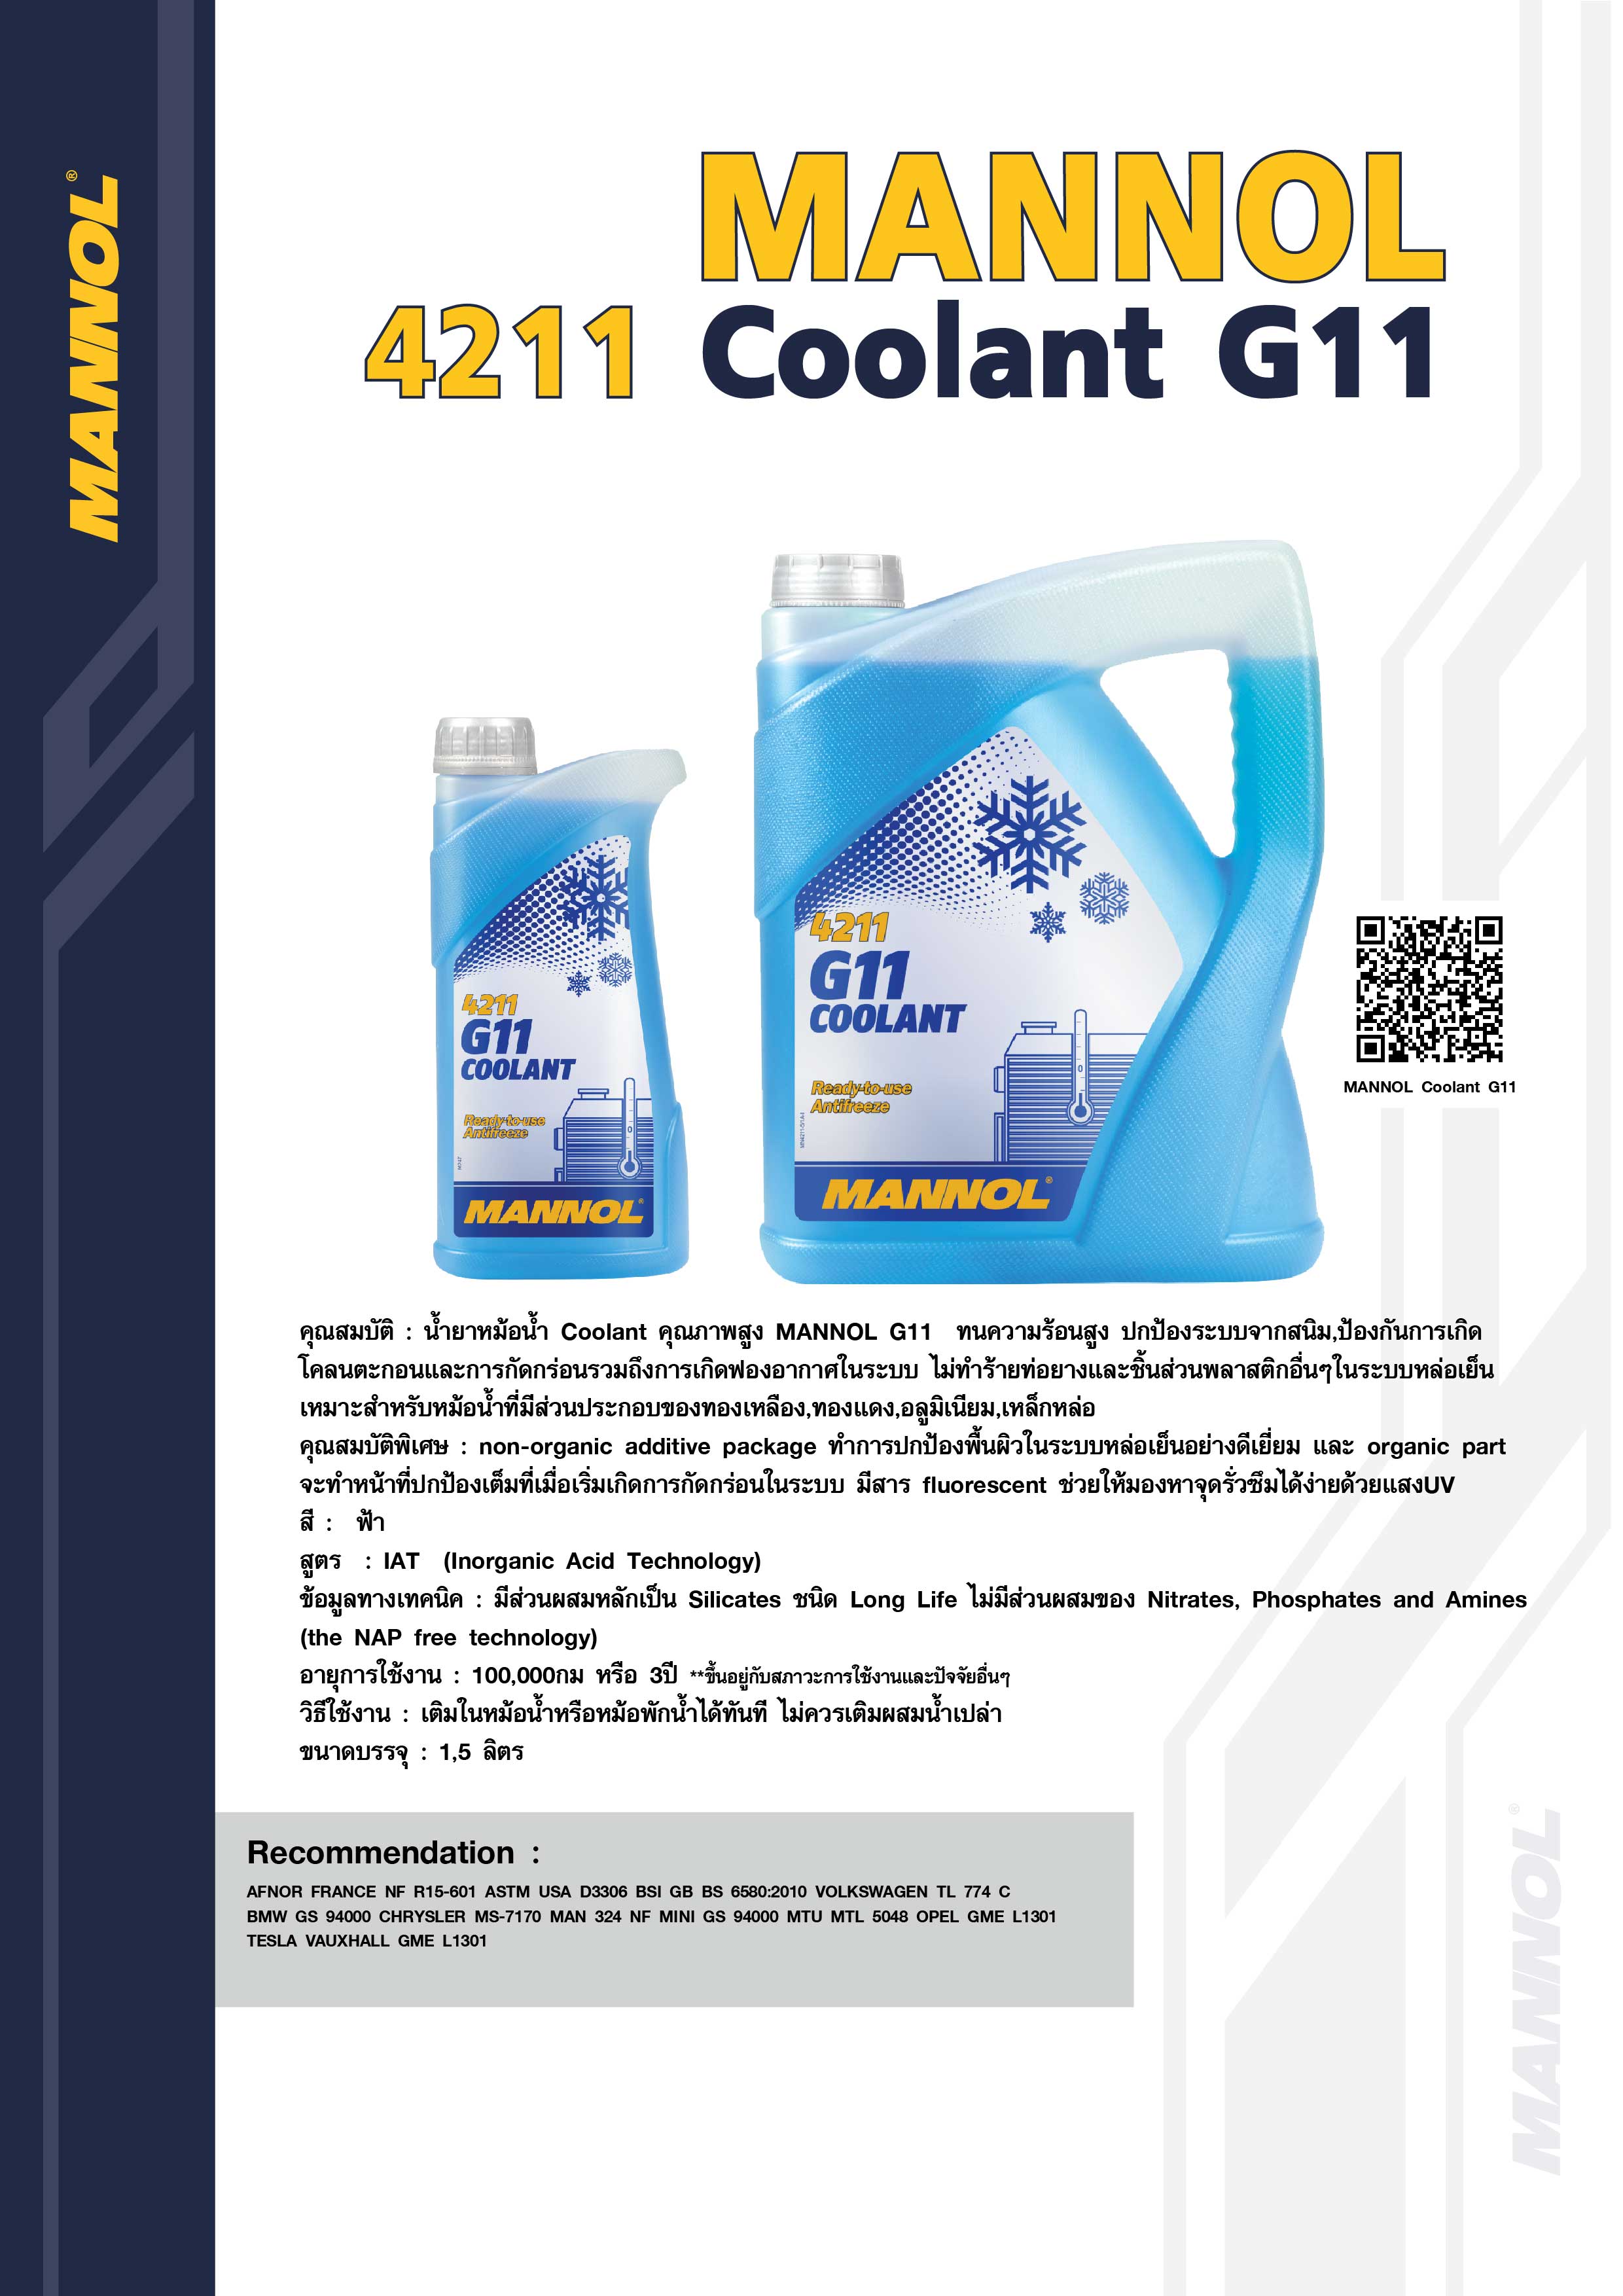 Mannol Coolant G11